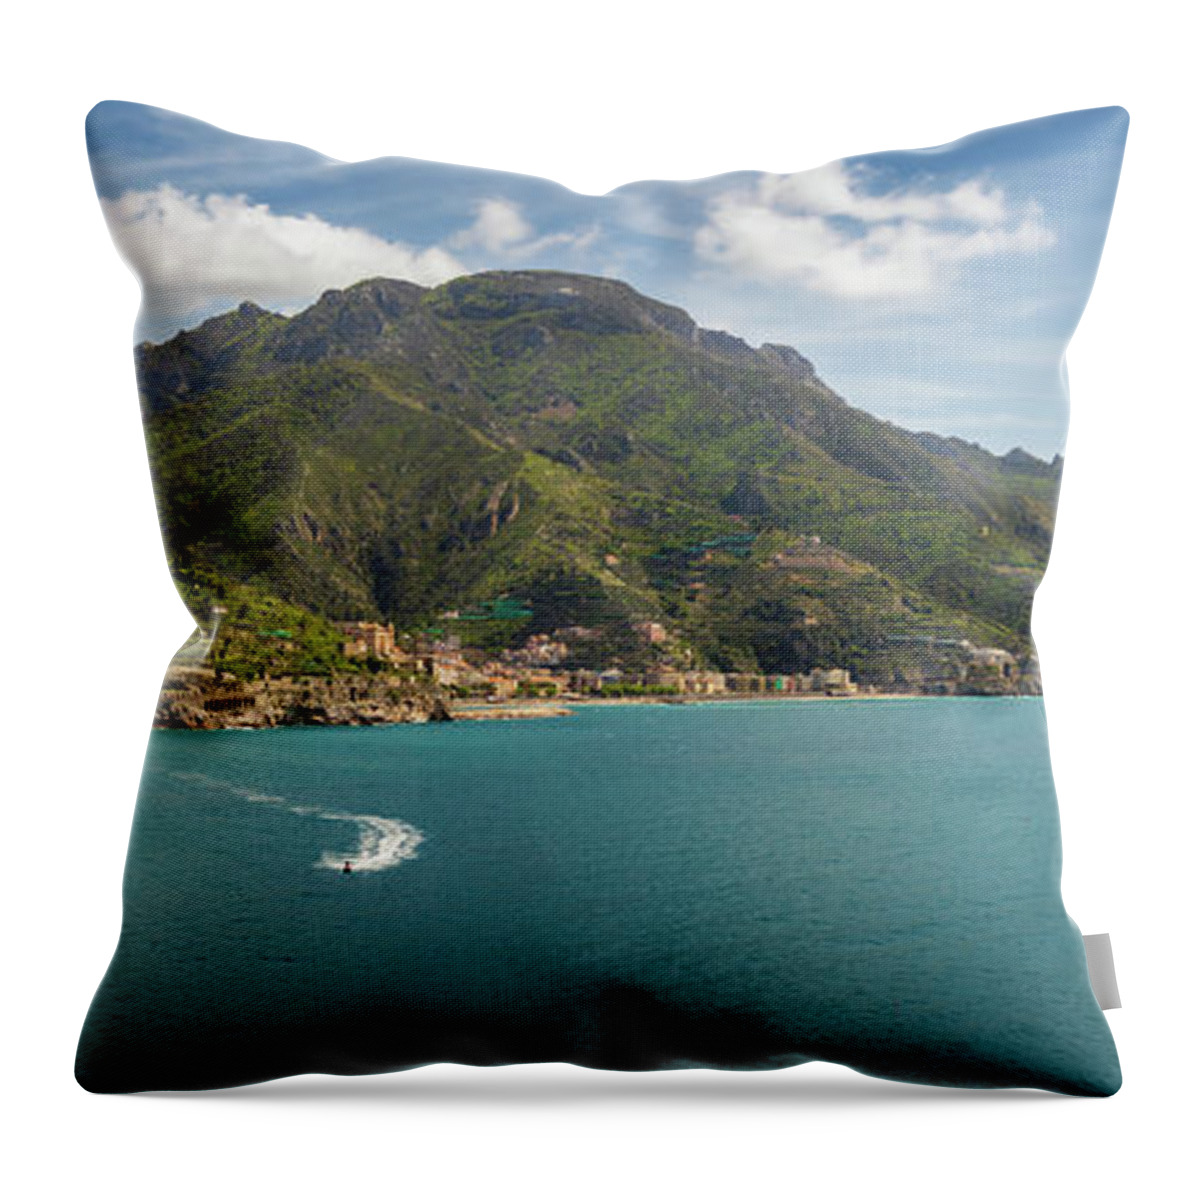 Amalfi Coast Throw Pillow featuring the photograph Panorama of Amalfi Coast by Umberto Barone